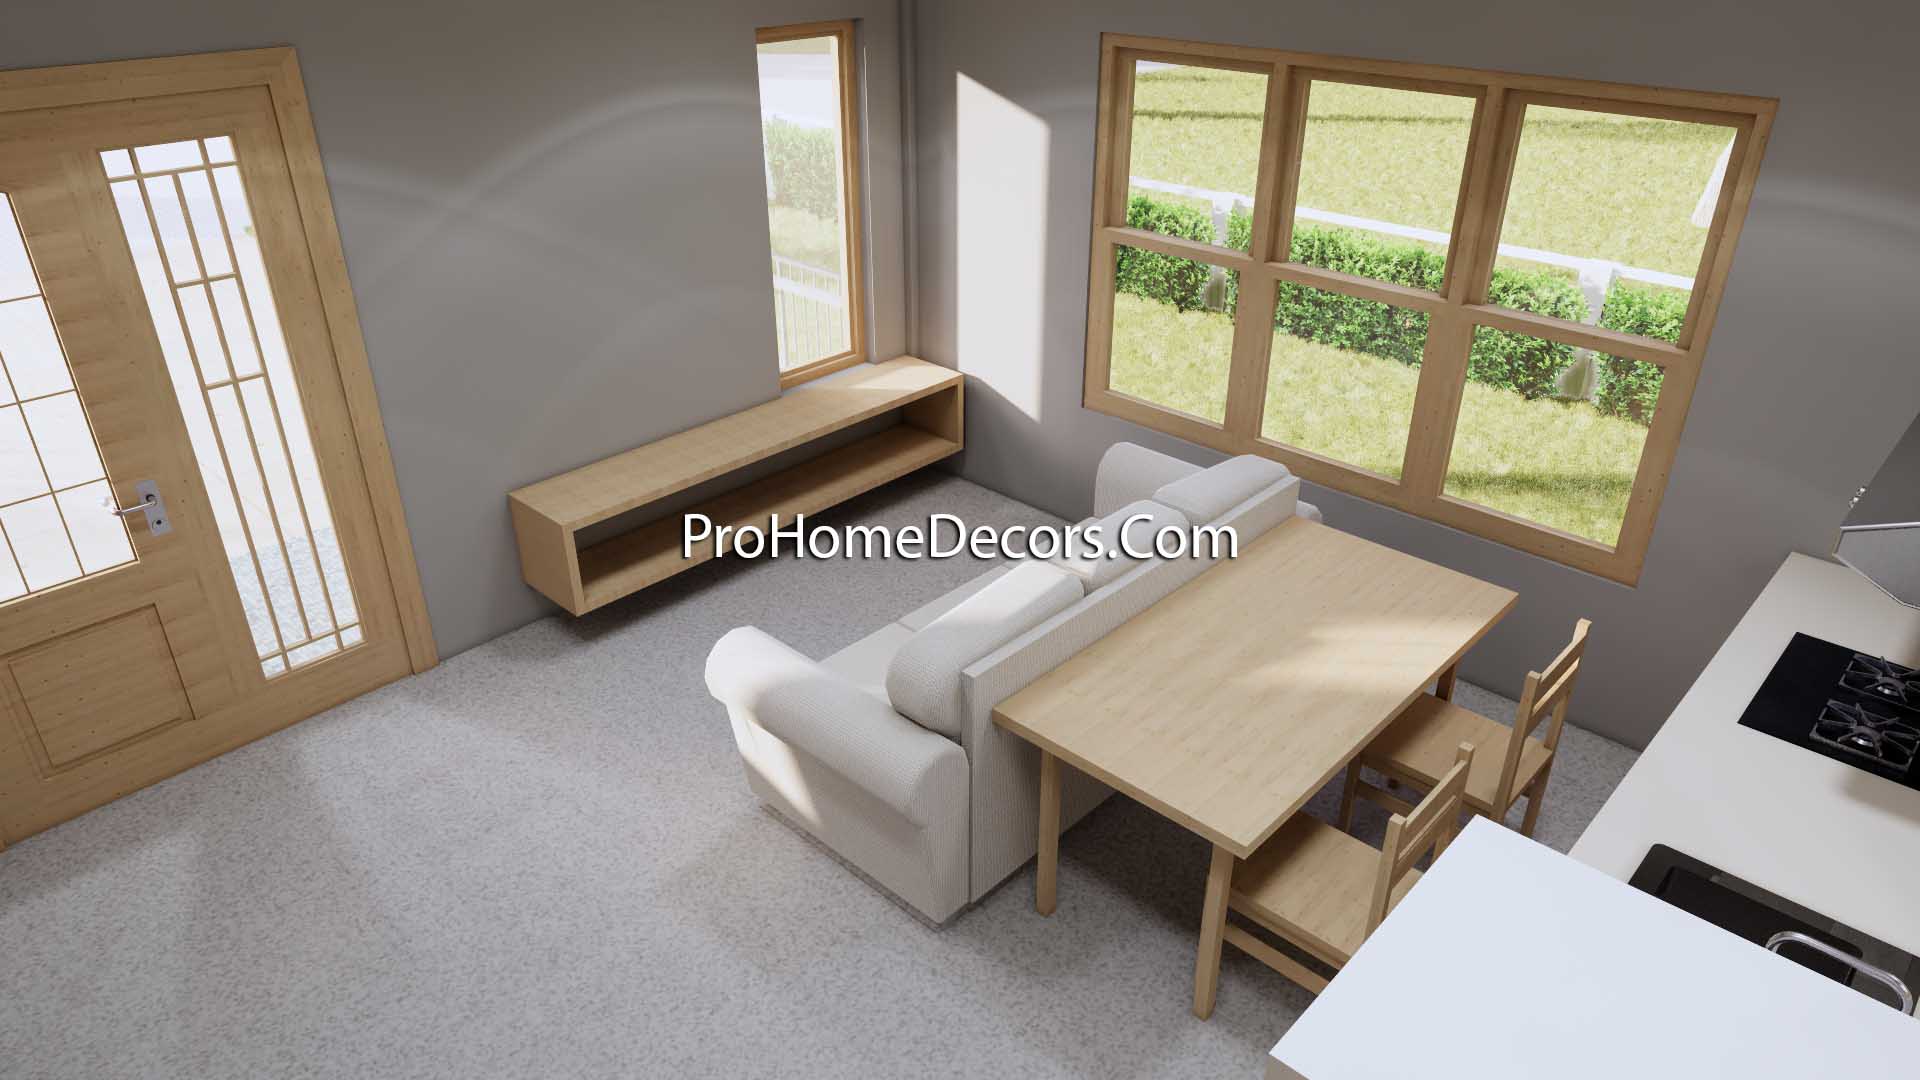 House Design Plans 32x16 Shed Roof 1 Bed Pdf Plan Pro Home Decor Z